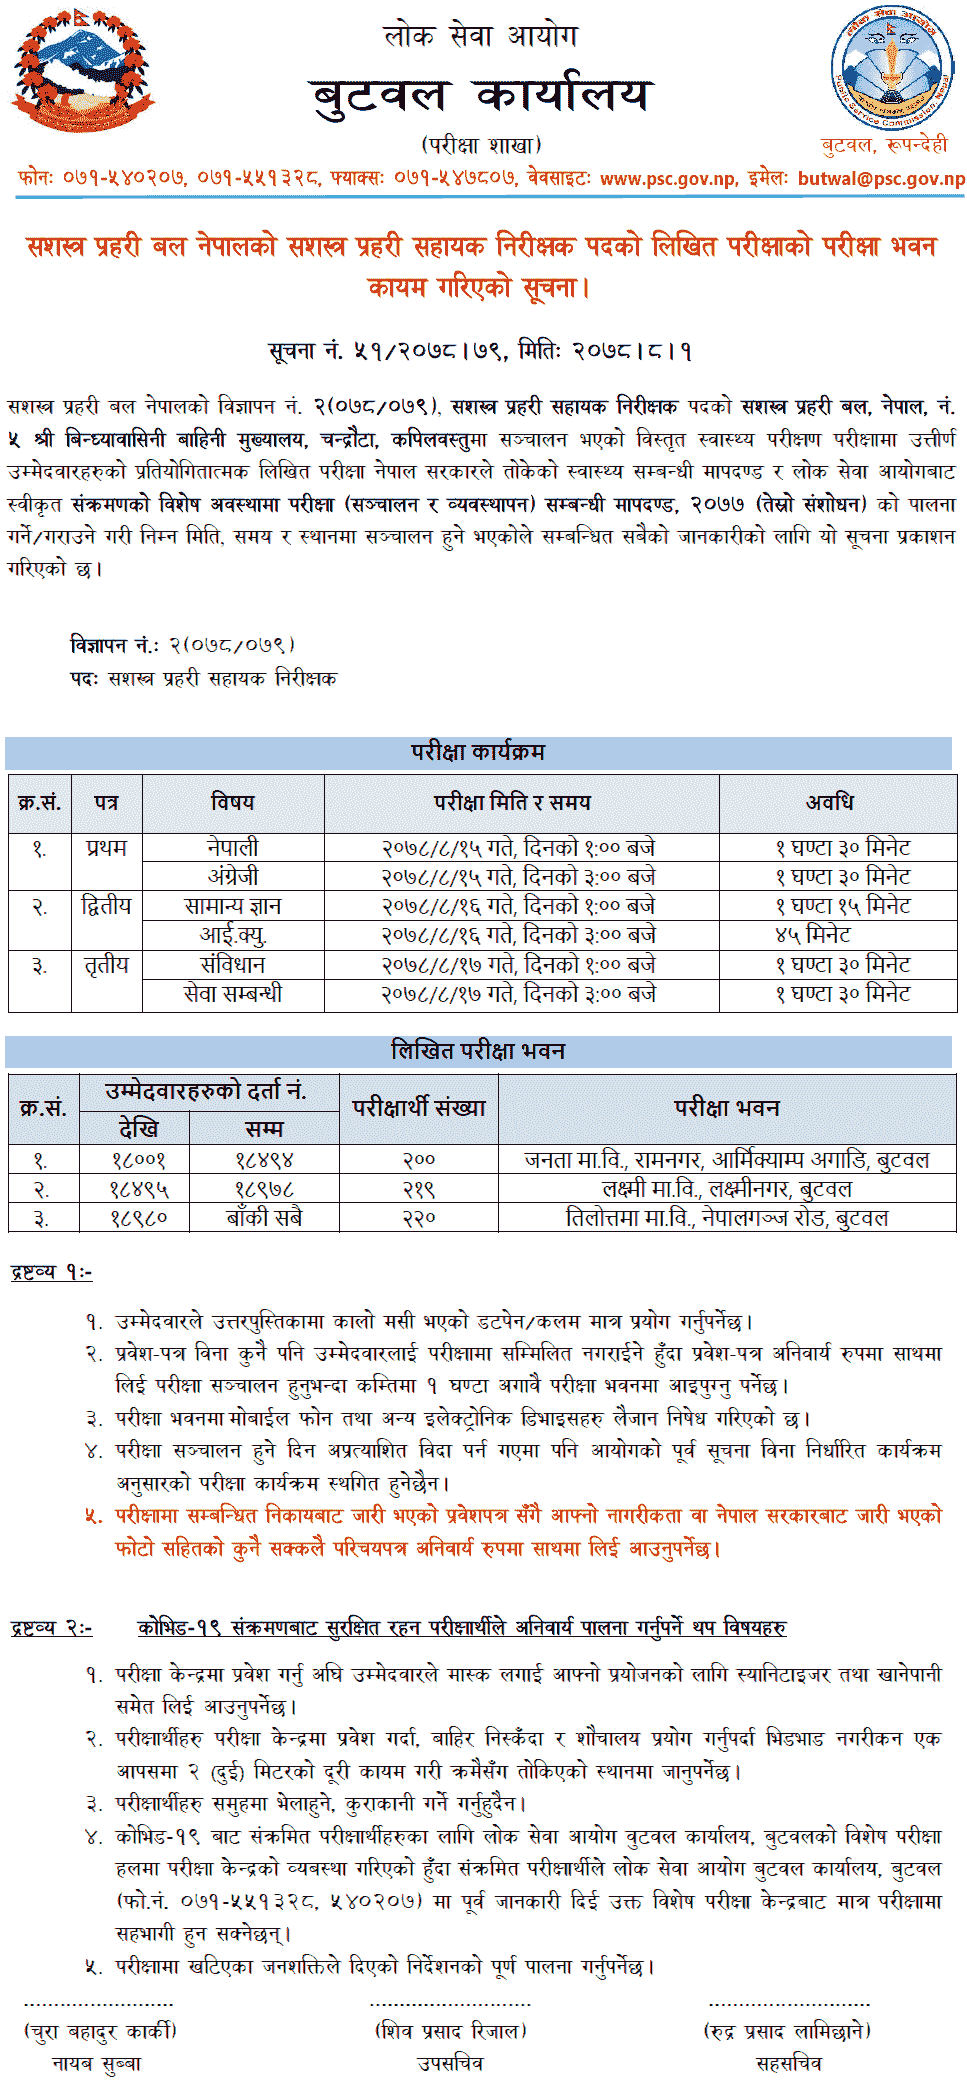 APF Nepal ASI Post Written Exam Center Butwal